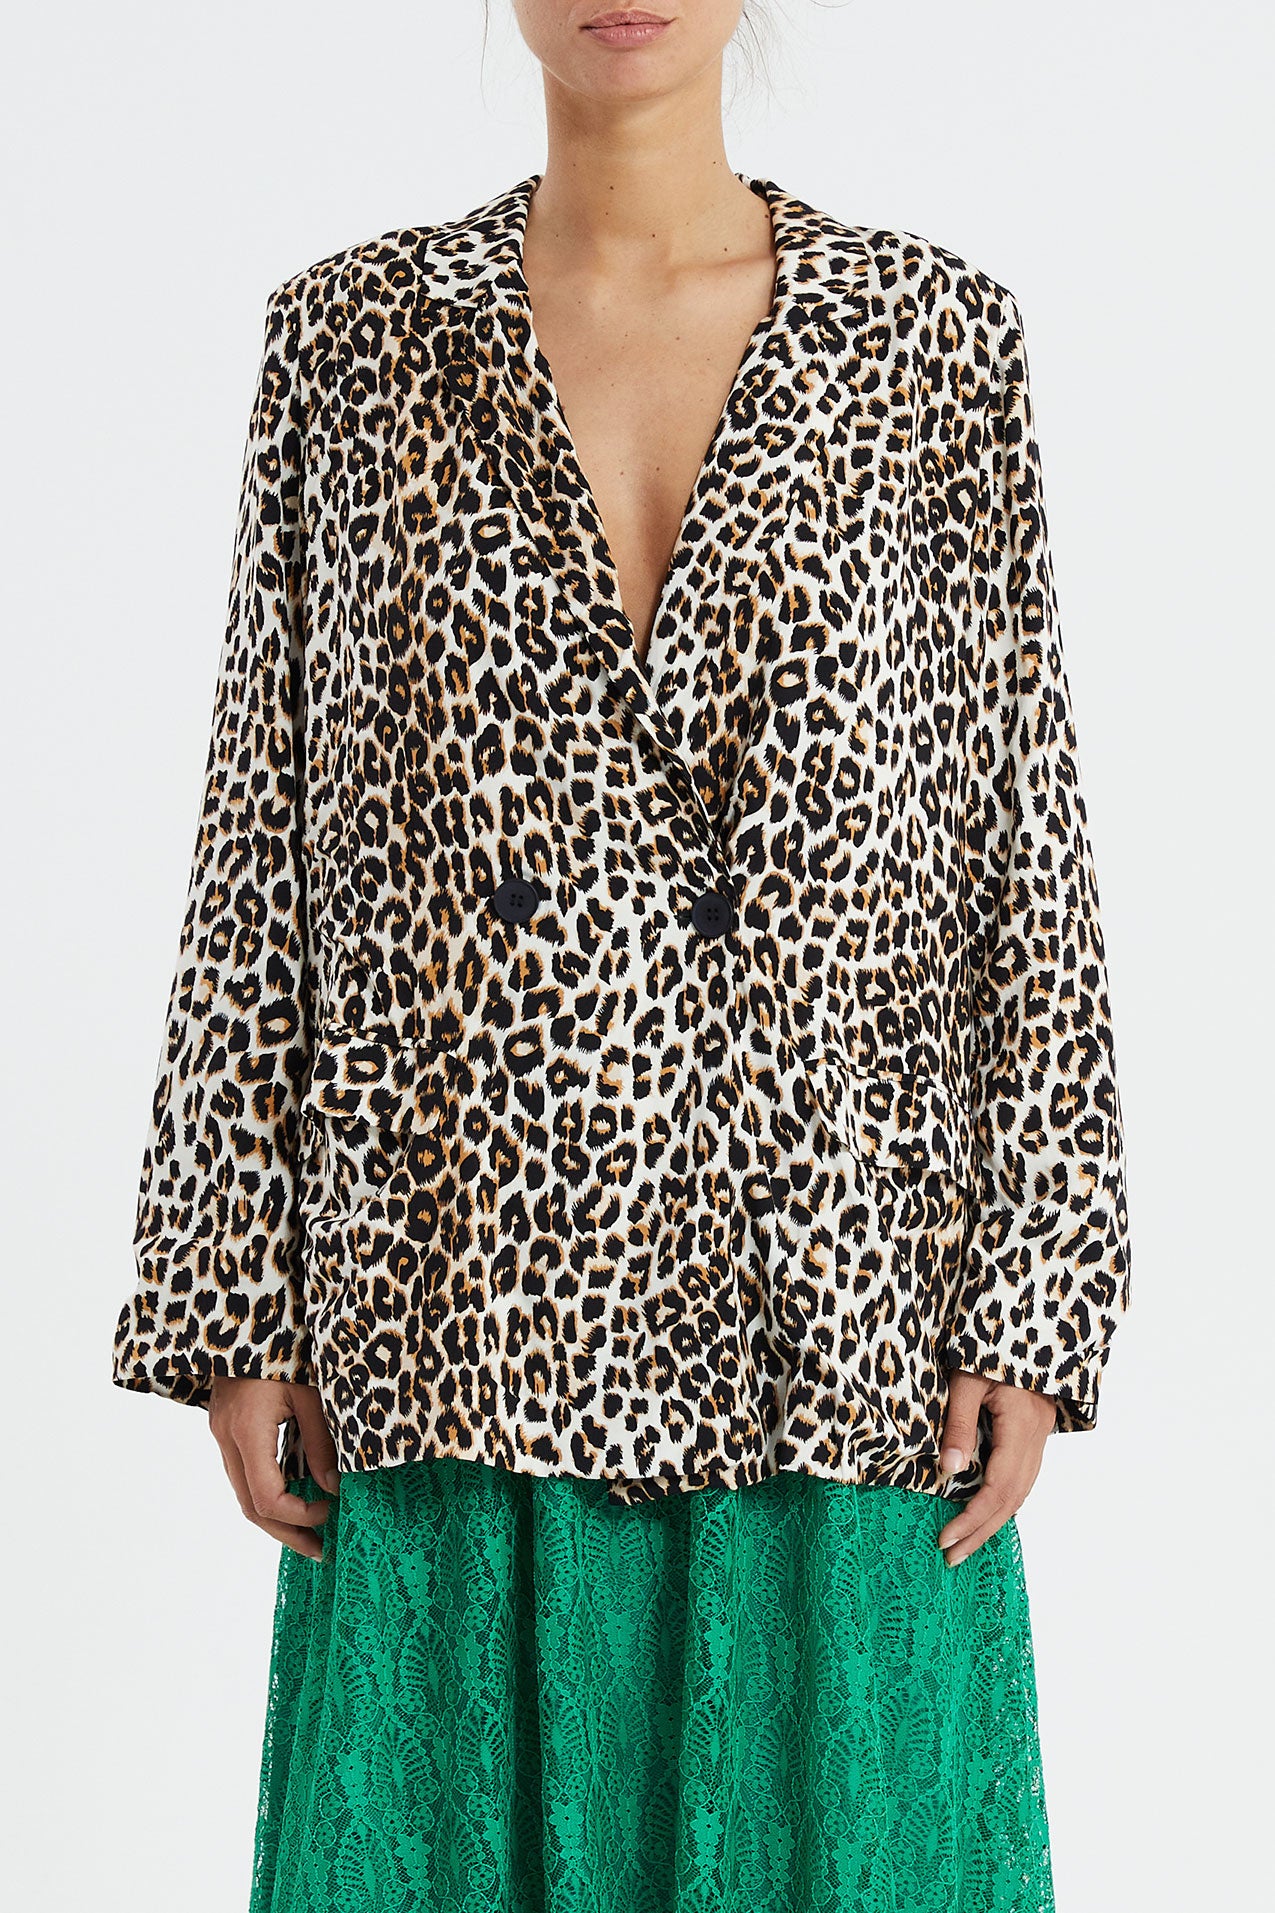 Lollys Laundry Jolie Blazer Jacket 72 Leopard Print